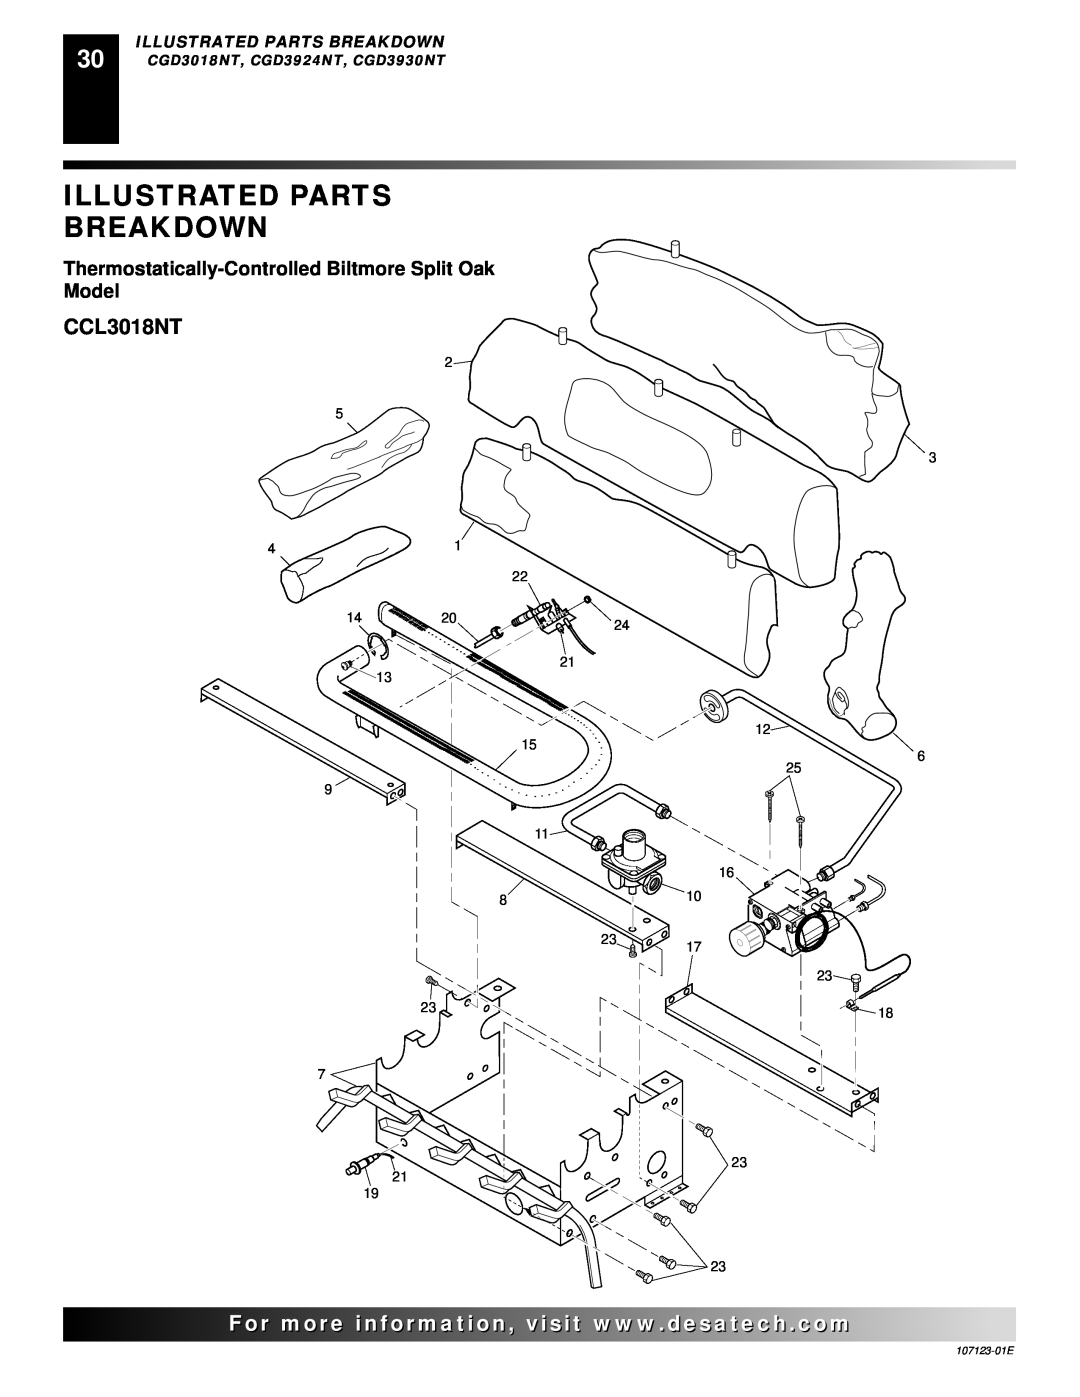 Desa CCL3018NT, CRL3124N, CRL2718N Illustrated Parts Breakdown, Thermostatically-ControlledBiltmore Split Oak, Model 